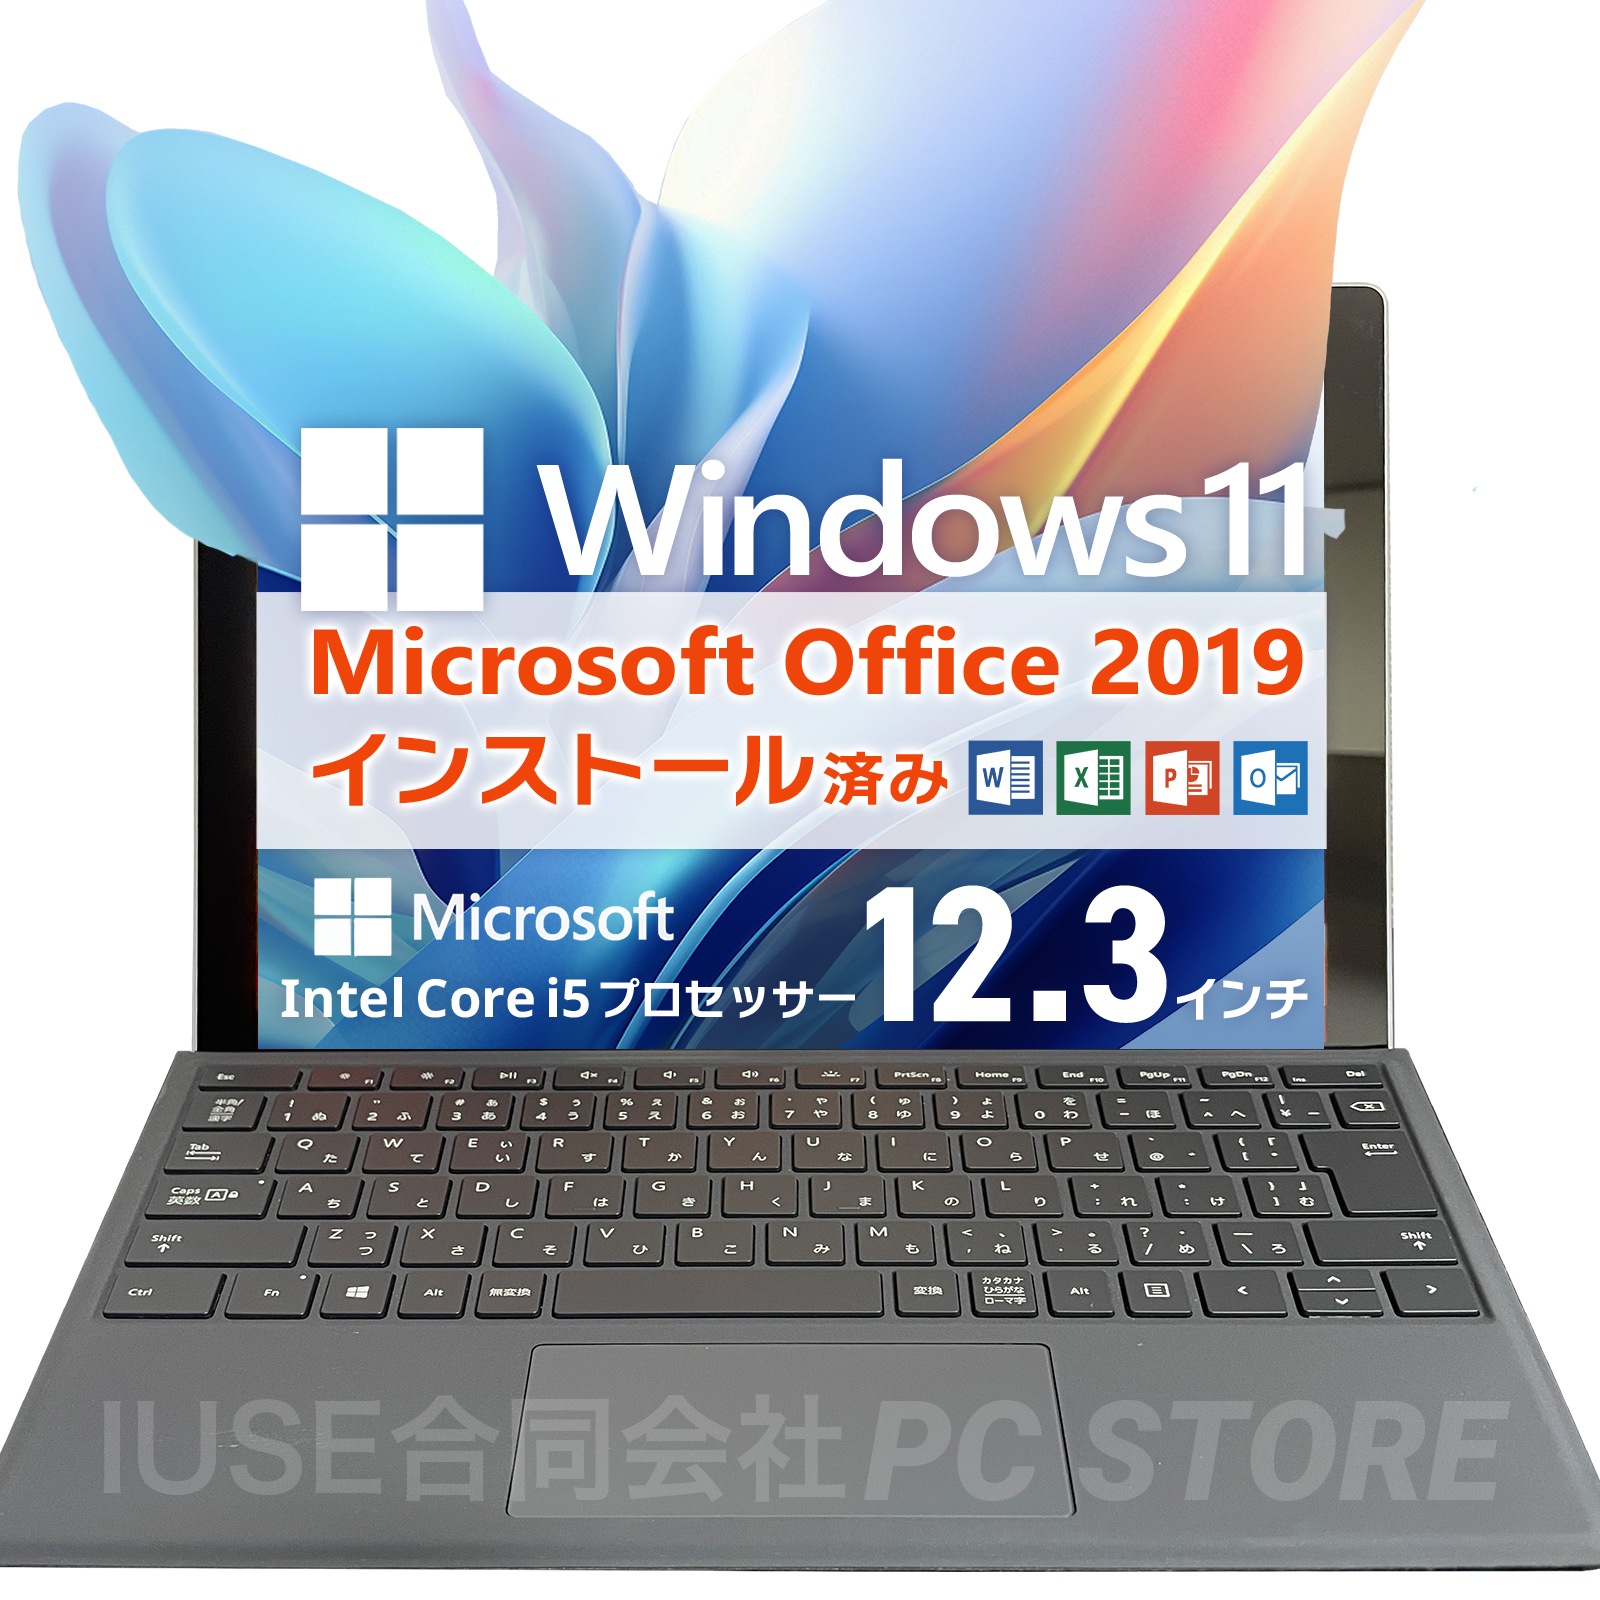 Microsoft最新Windows11 Surface Pro 7 Office2019 H&B プロダクトキー付（WordExcelPowerPoint）第10世代Core i5 メモリ8GB SSD128GB